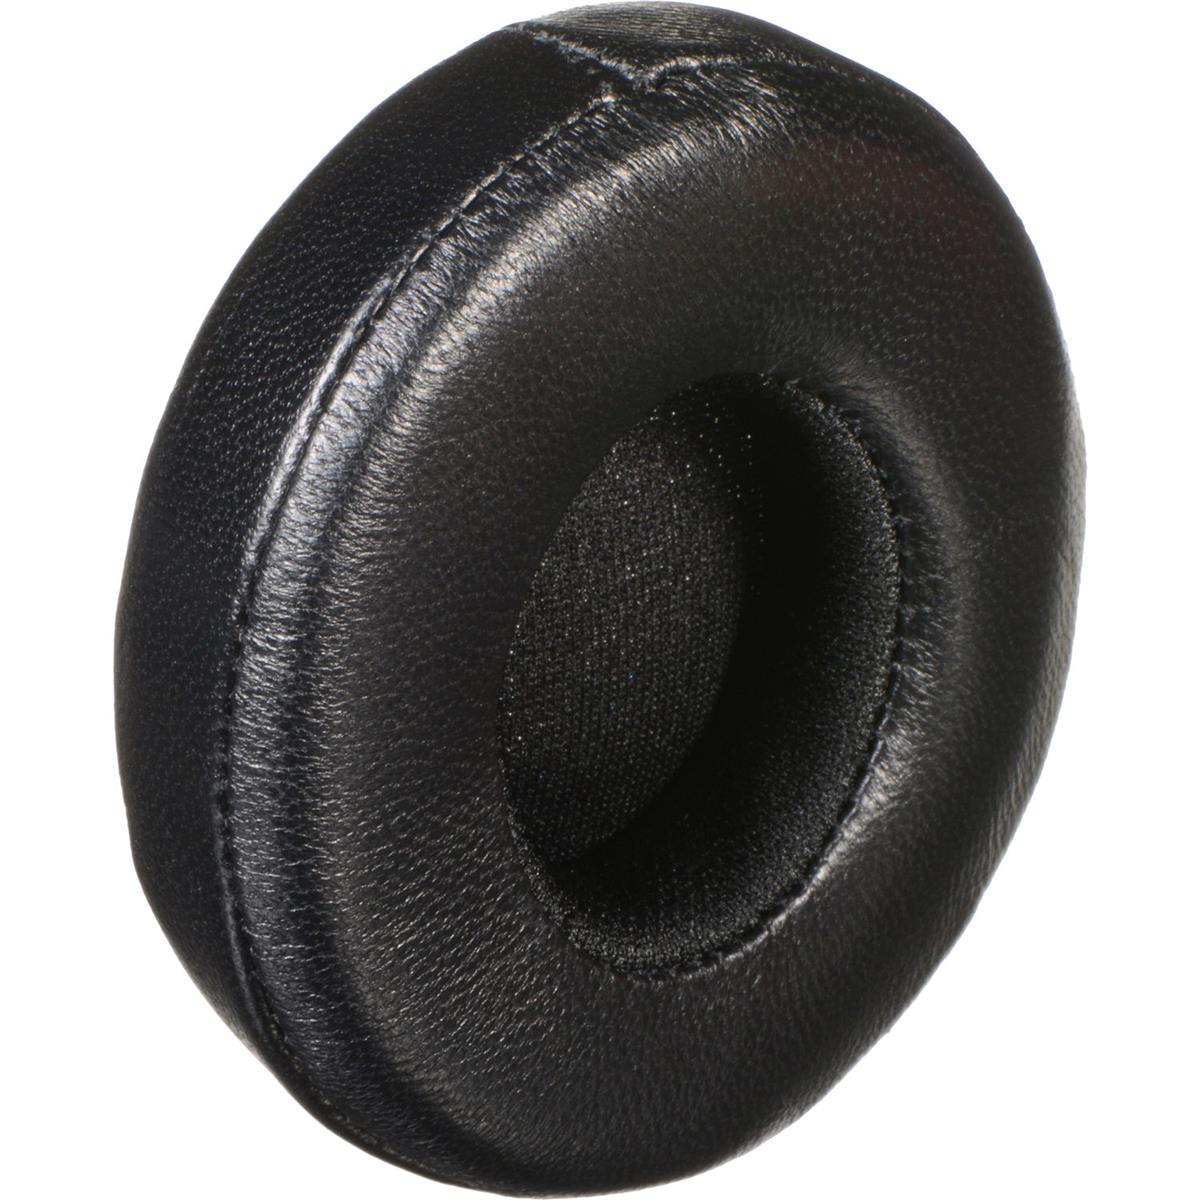 Image of Dekoni Audio Elite Sheepskin Ear Pads for Beats by Dr. Dre Solo 2.0 Headphones